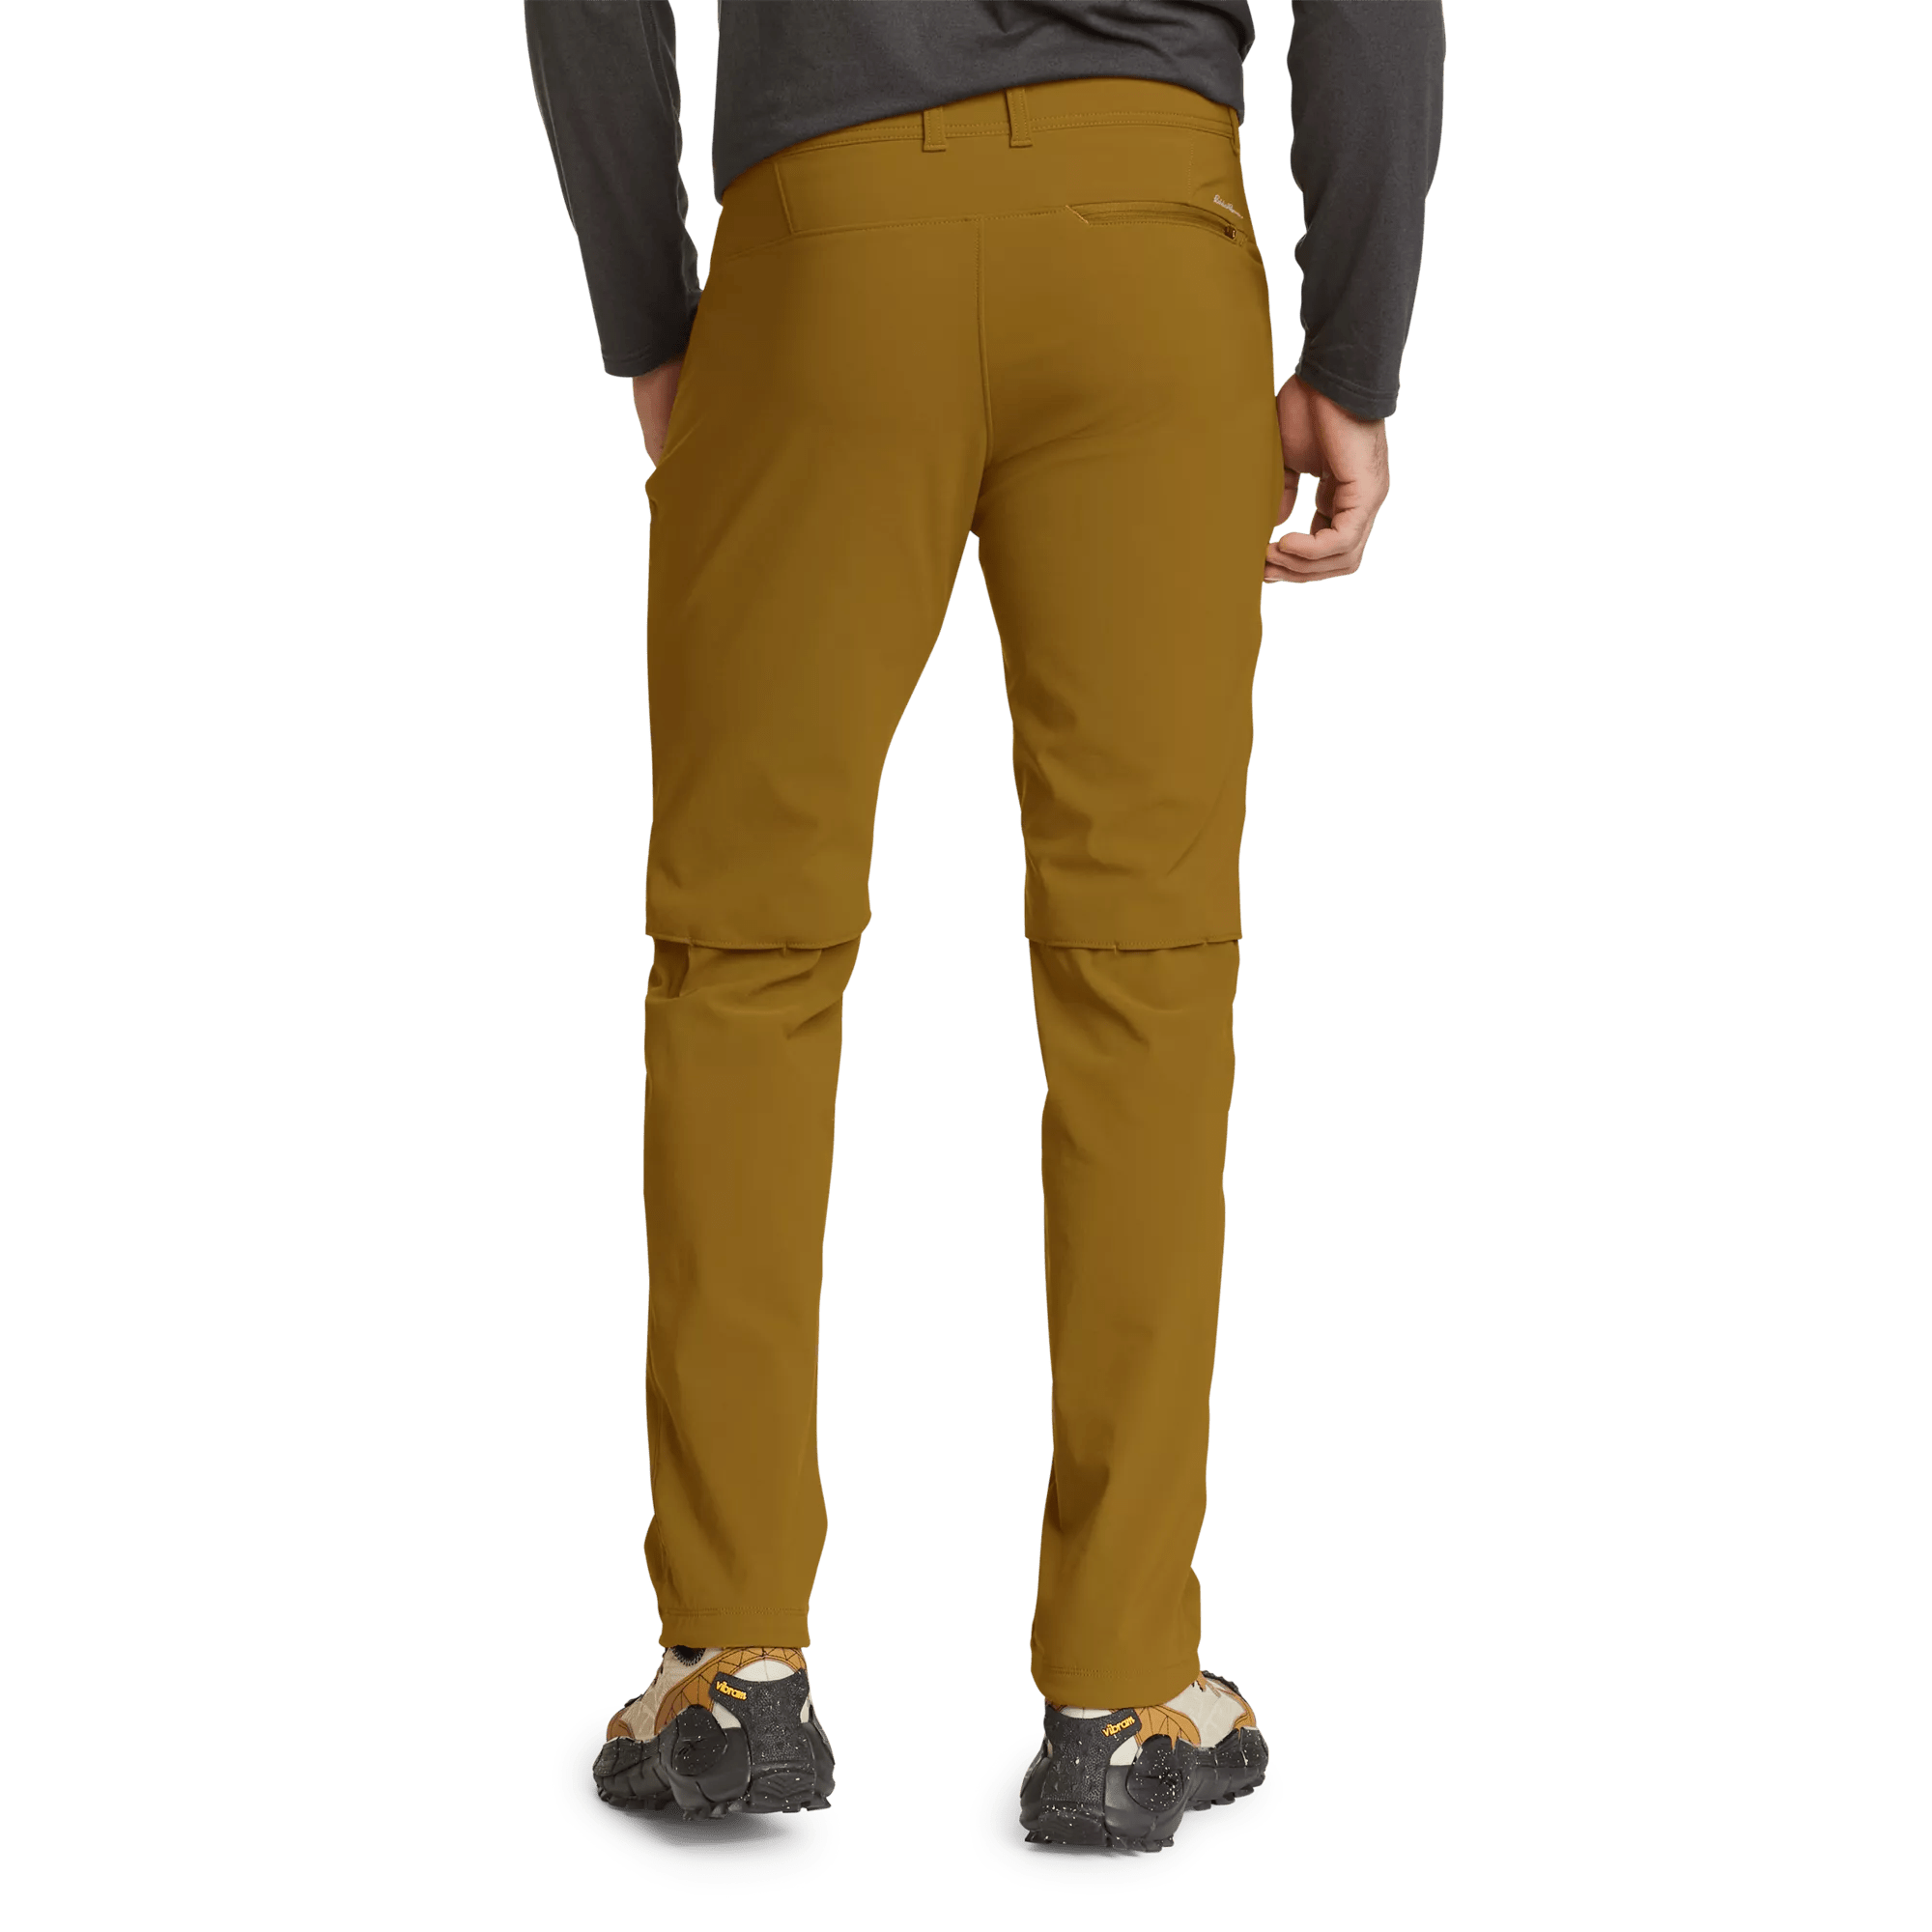 Guide Pro 4S Trekker Pants